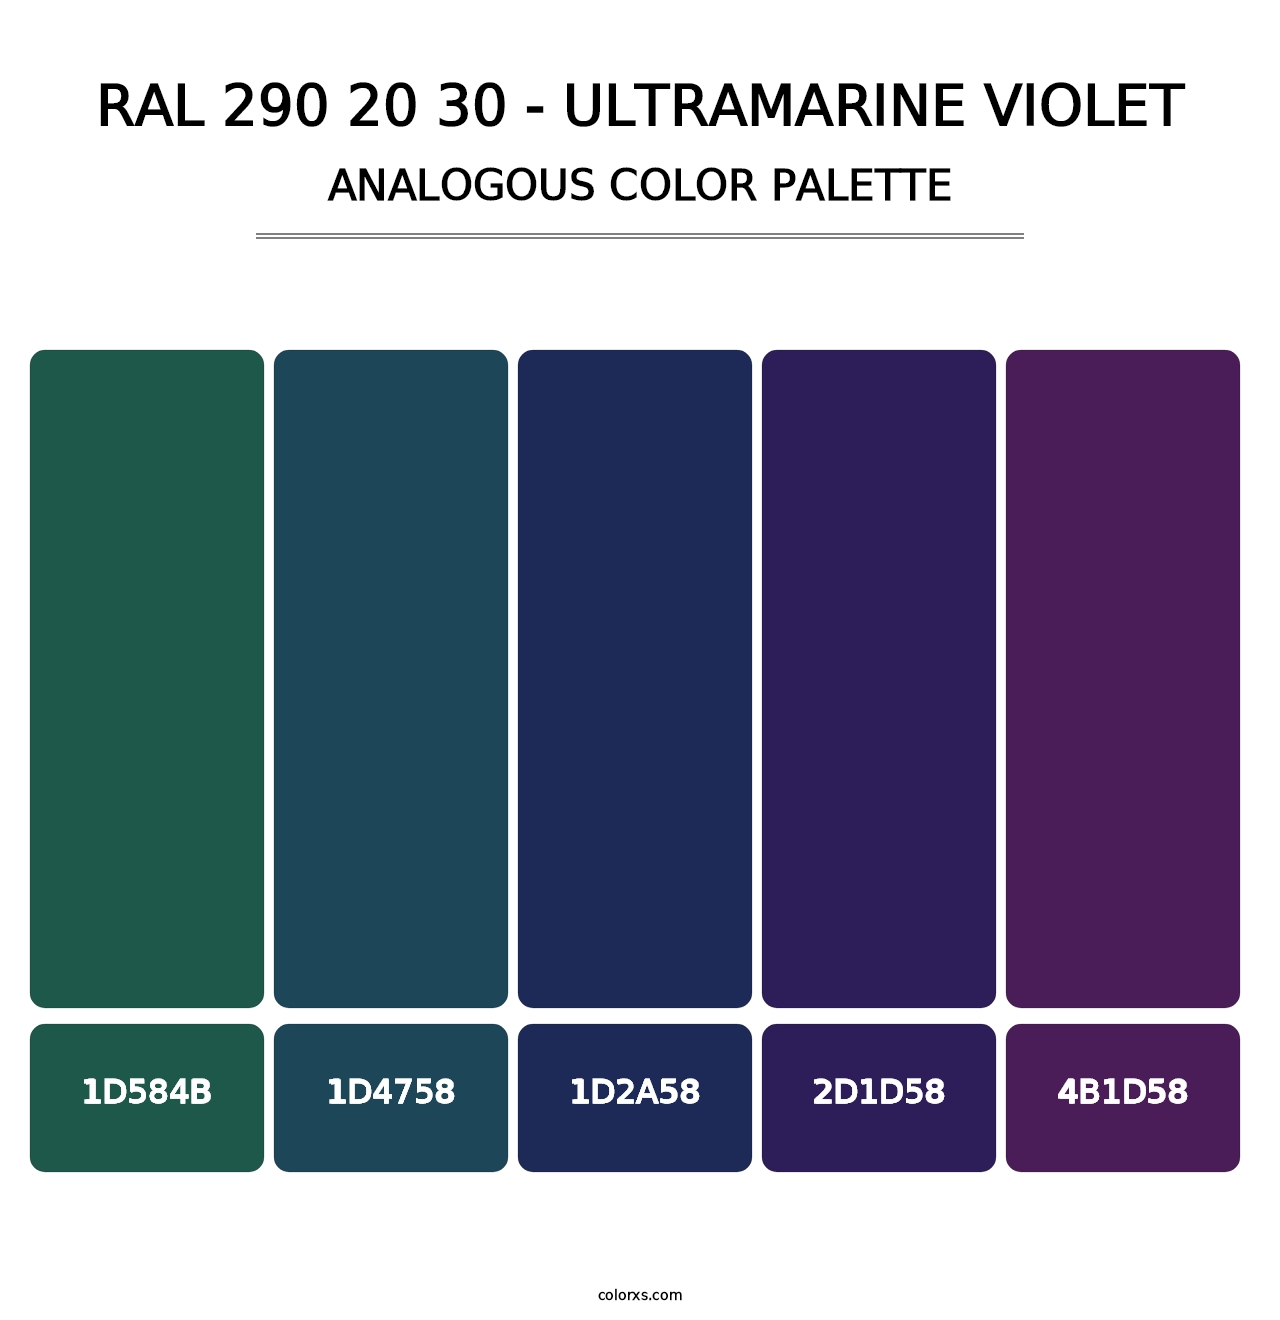 RAL 290 20 30 - Ultramarine Violet - Analogous Color Palette